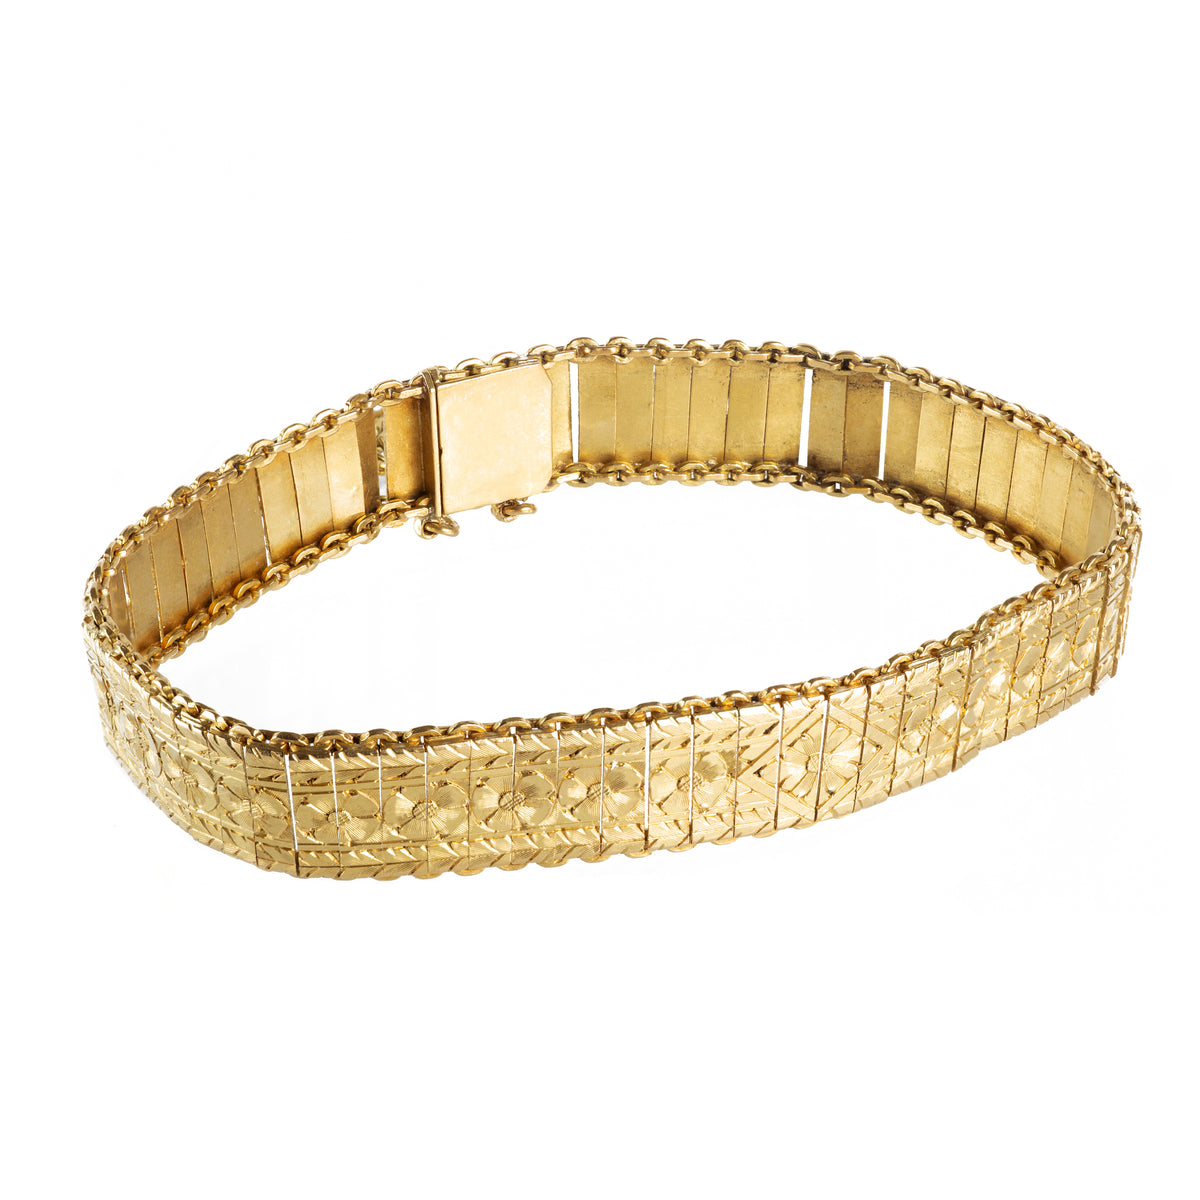 French Antique Gold Bracelet